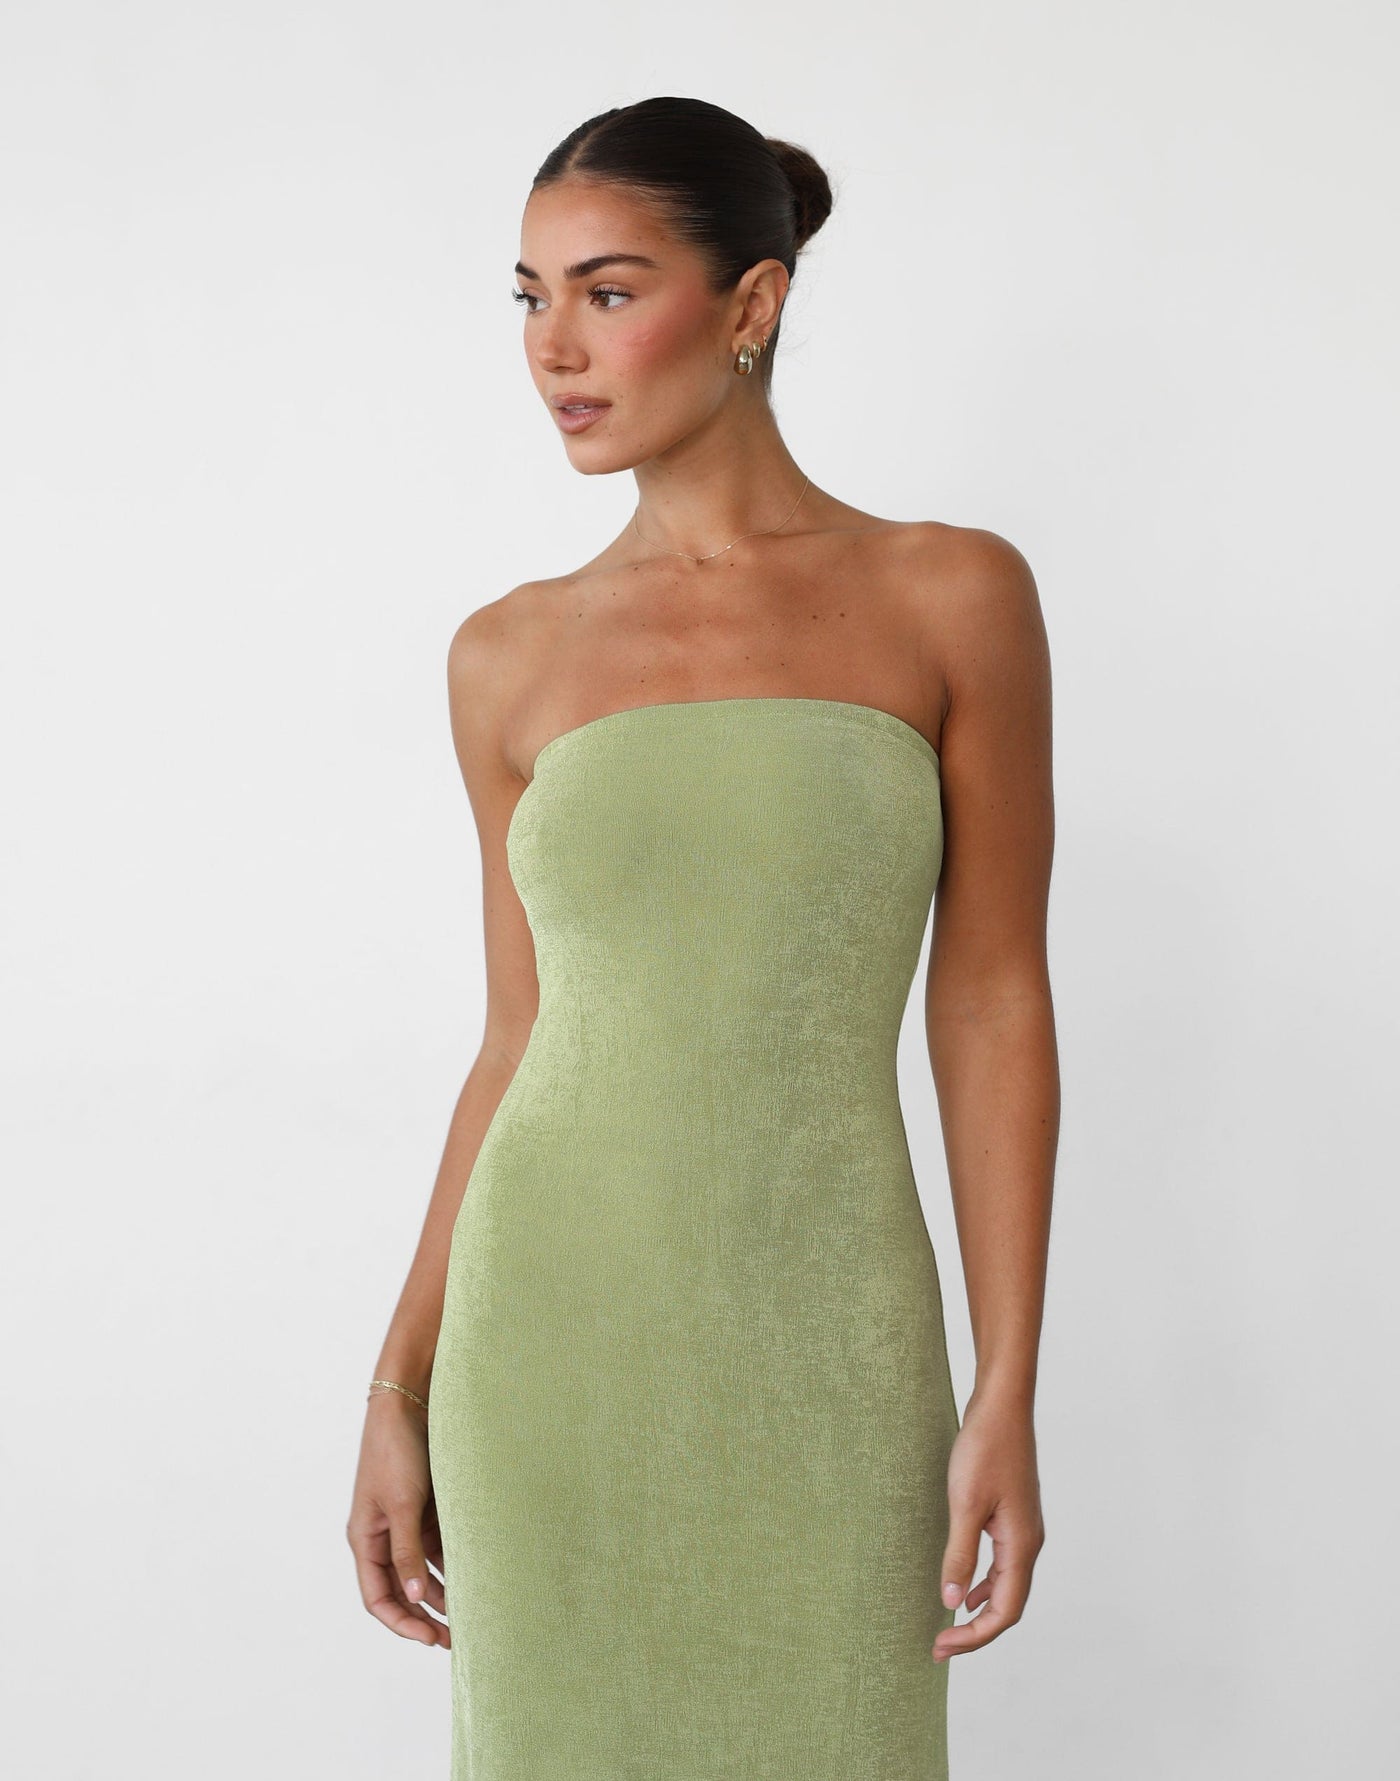 Abelle Maxi Dress (Lime) - Strapless Tube Flowy Maxi Dress - Women's Dress - Charcoal Clothing